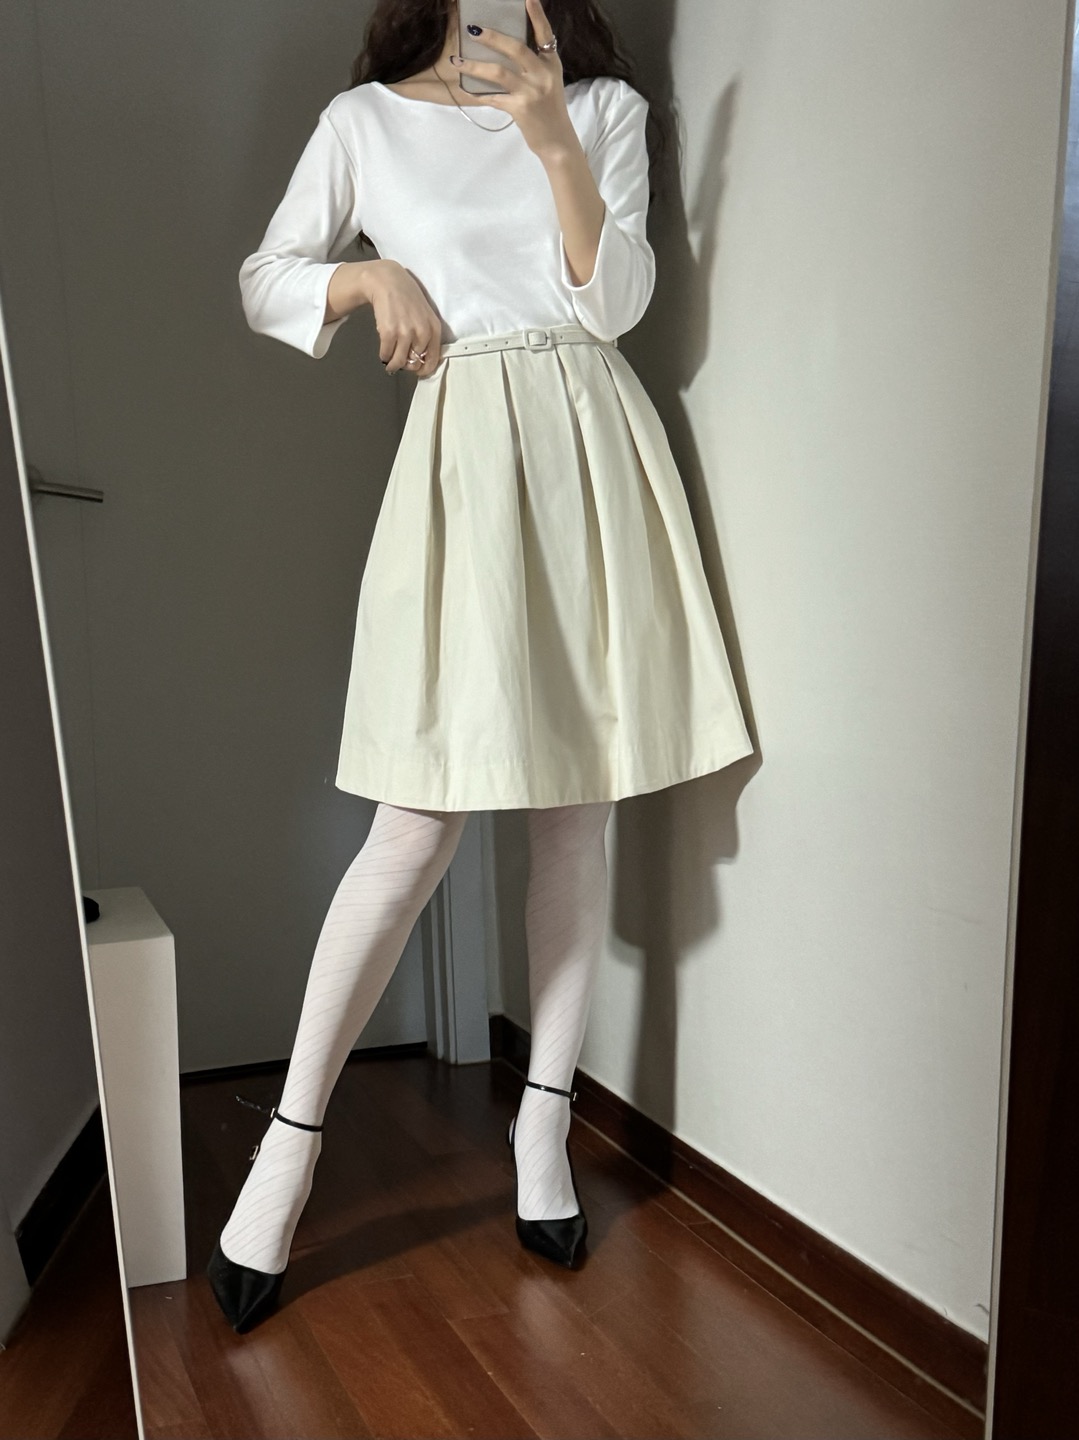 tiffany skirt(13일pm7마감)